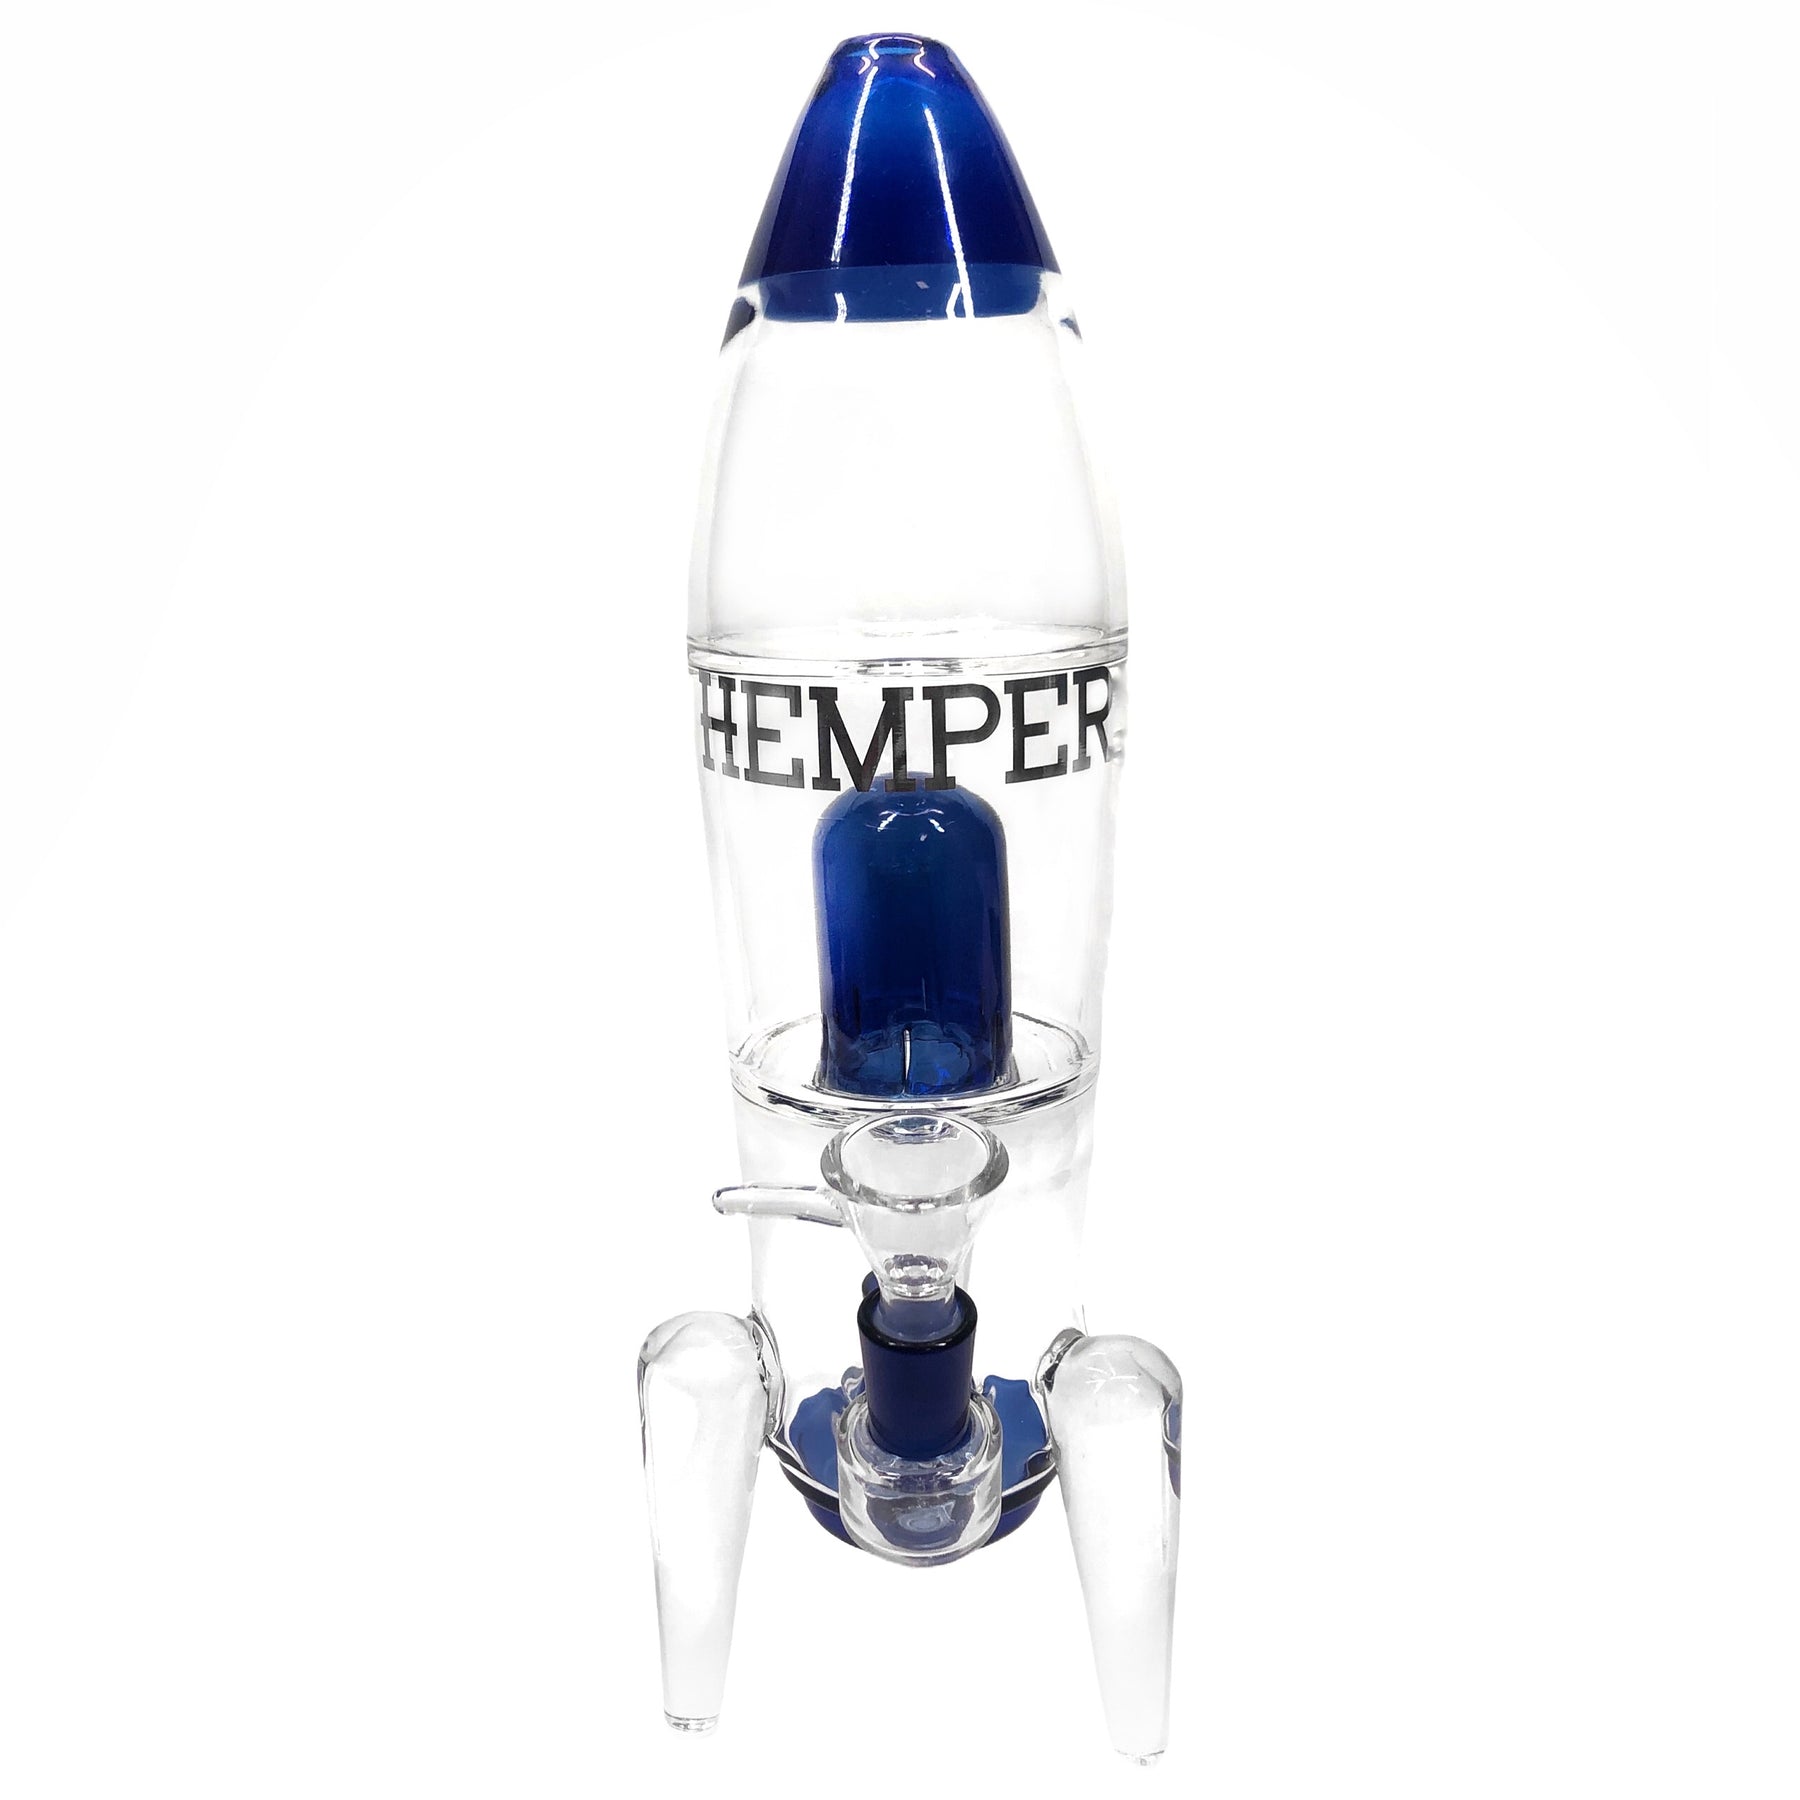 Hemper Rocket Ship Water Bong